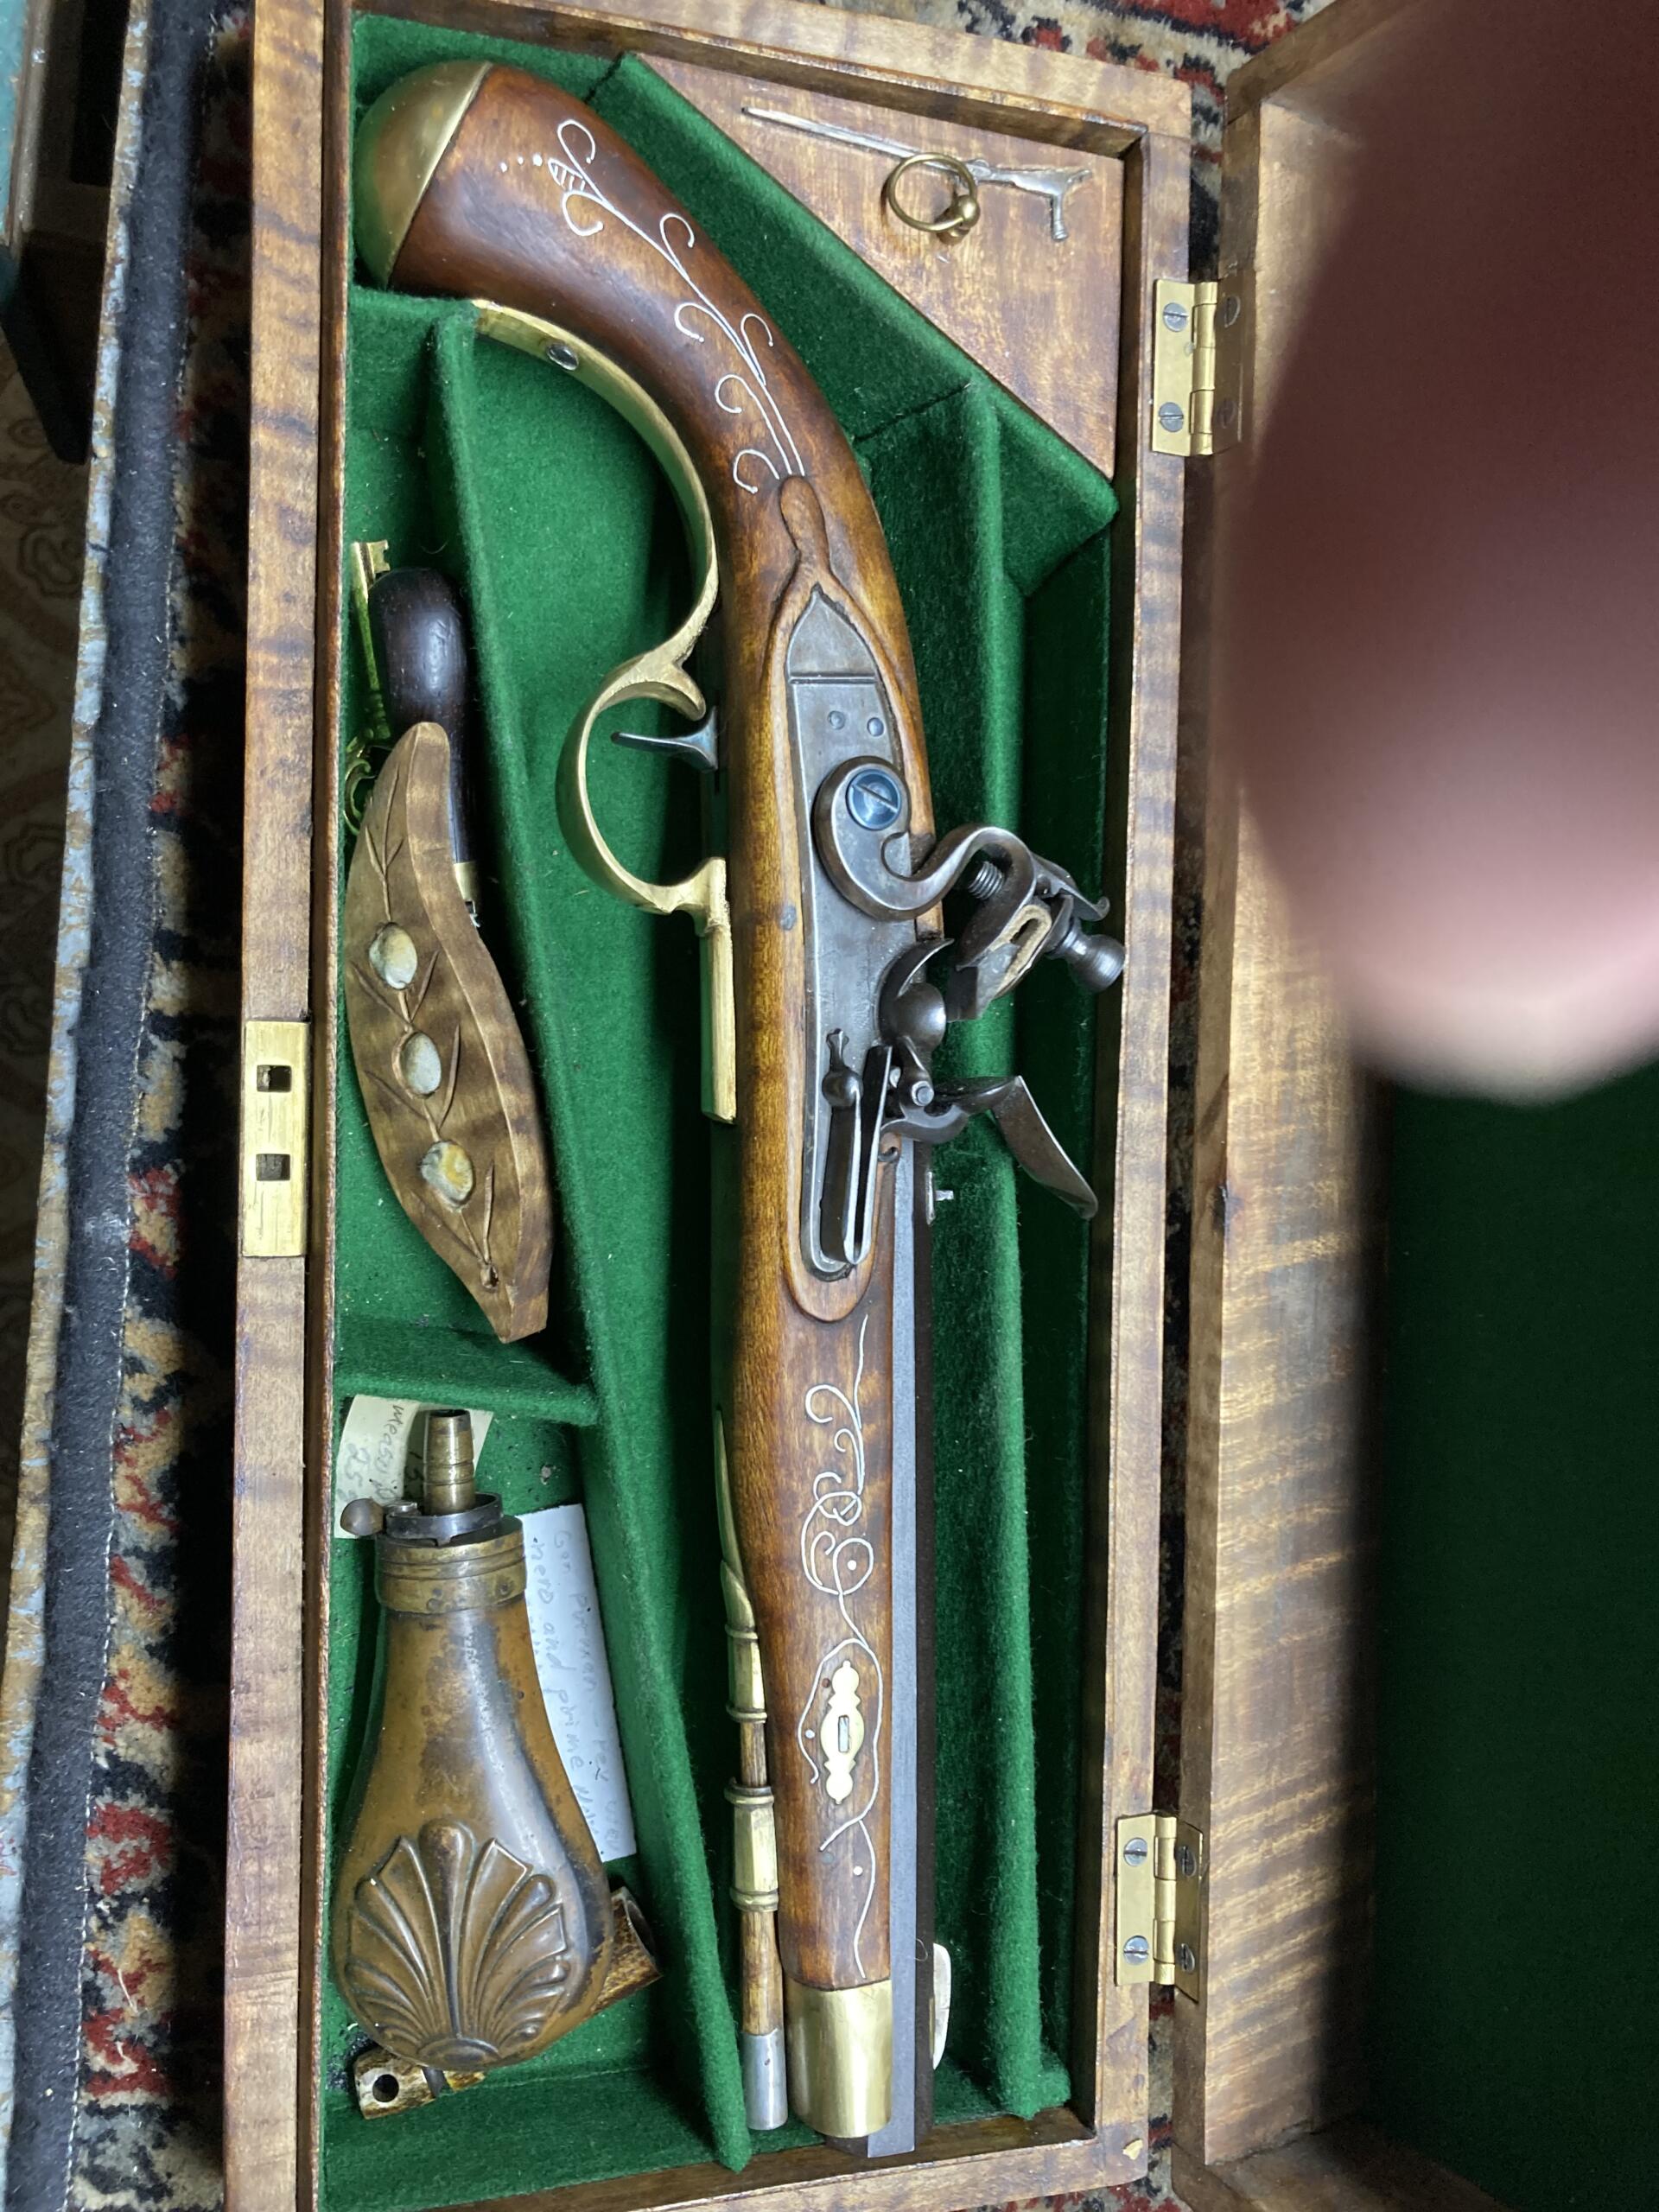 Cased Pair of Flintlock Pistols with Accessories MET LC-28 196 1a